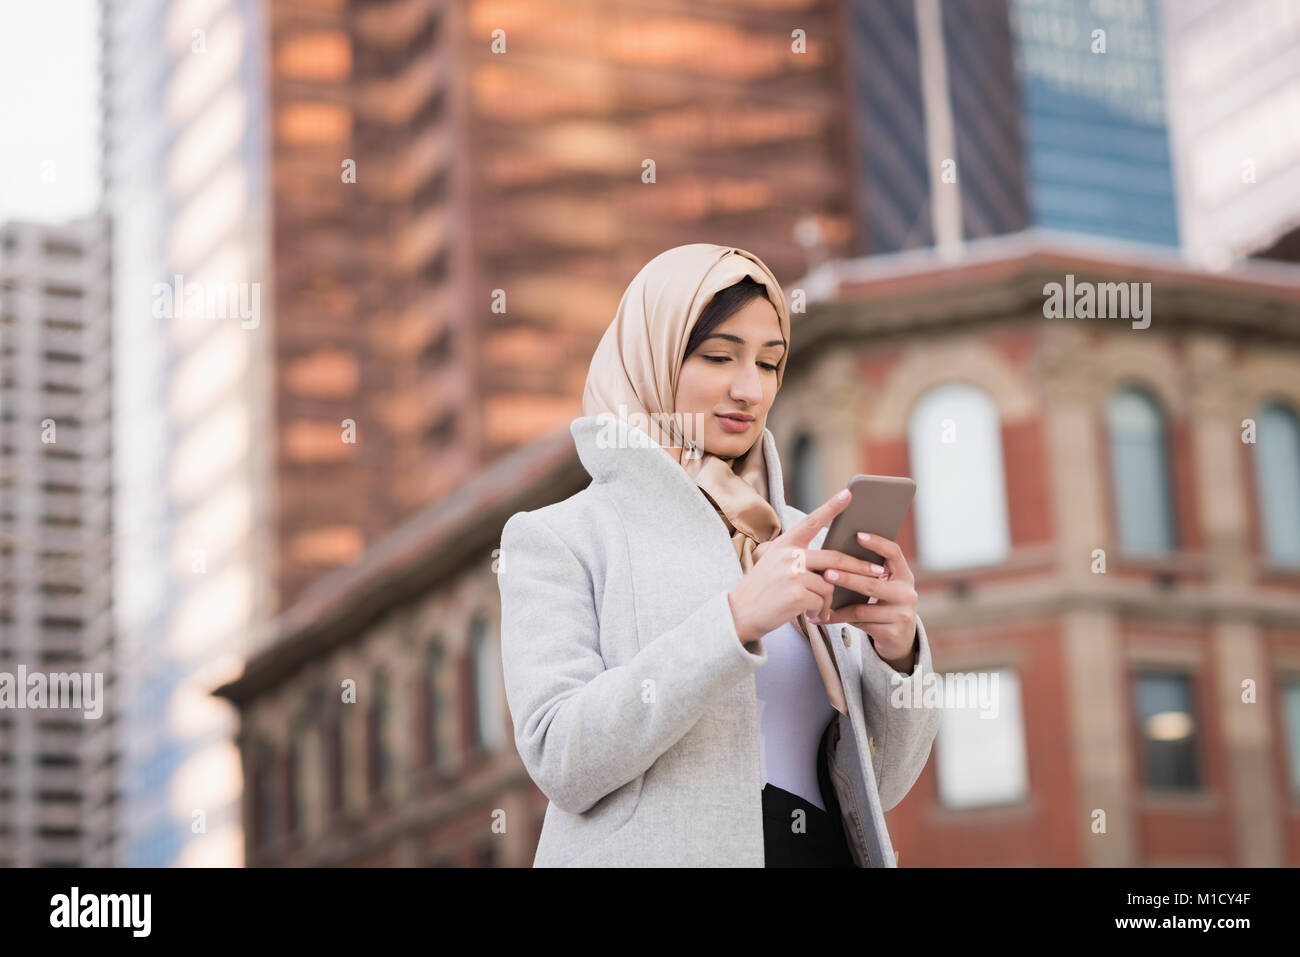 Woman in hijab using mobile phone Stock Photo